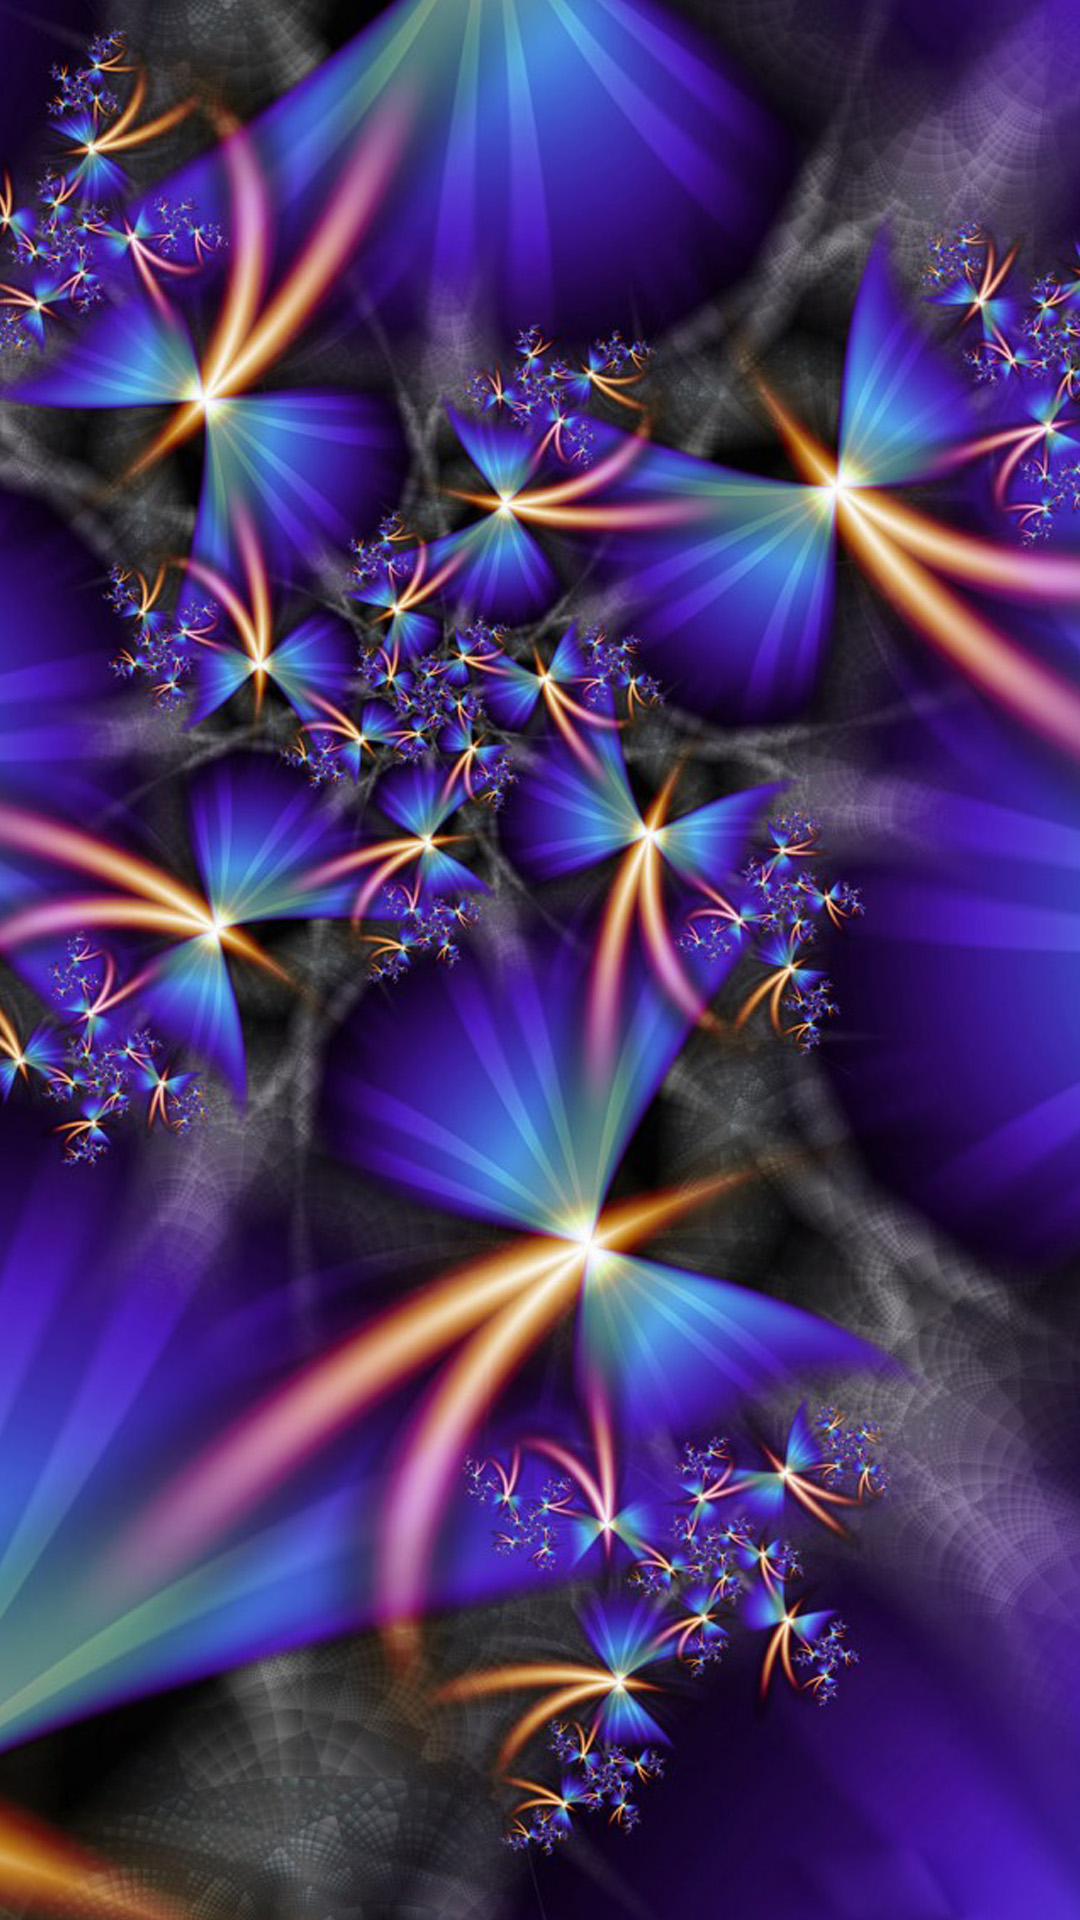 colorful wallpaper for android,purple,violet,blue,fractal art,plant